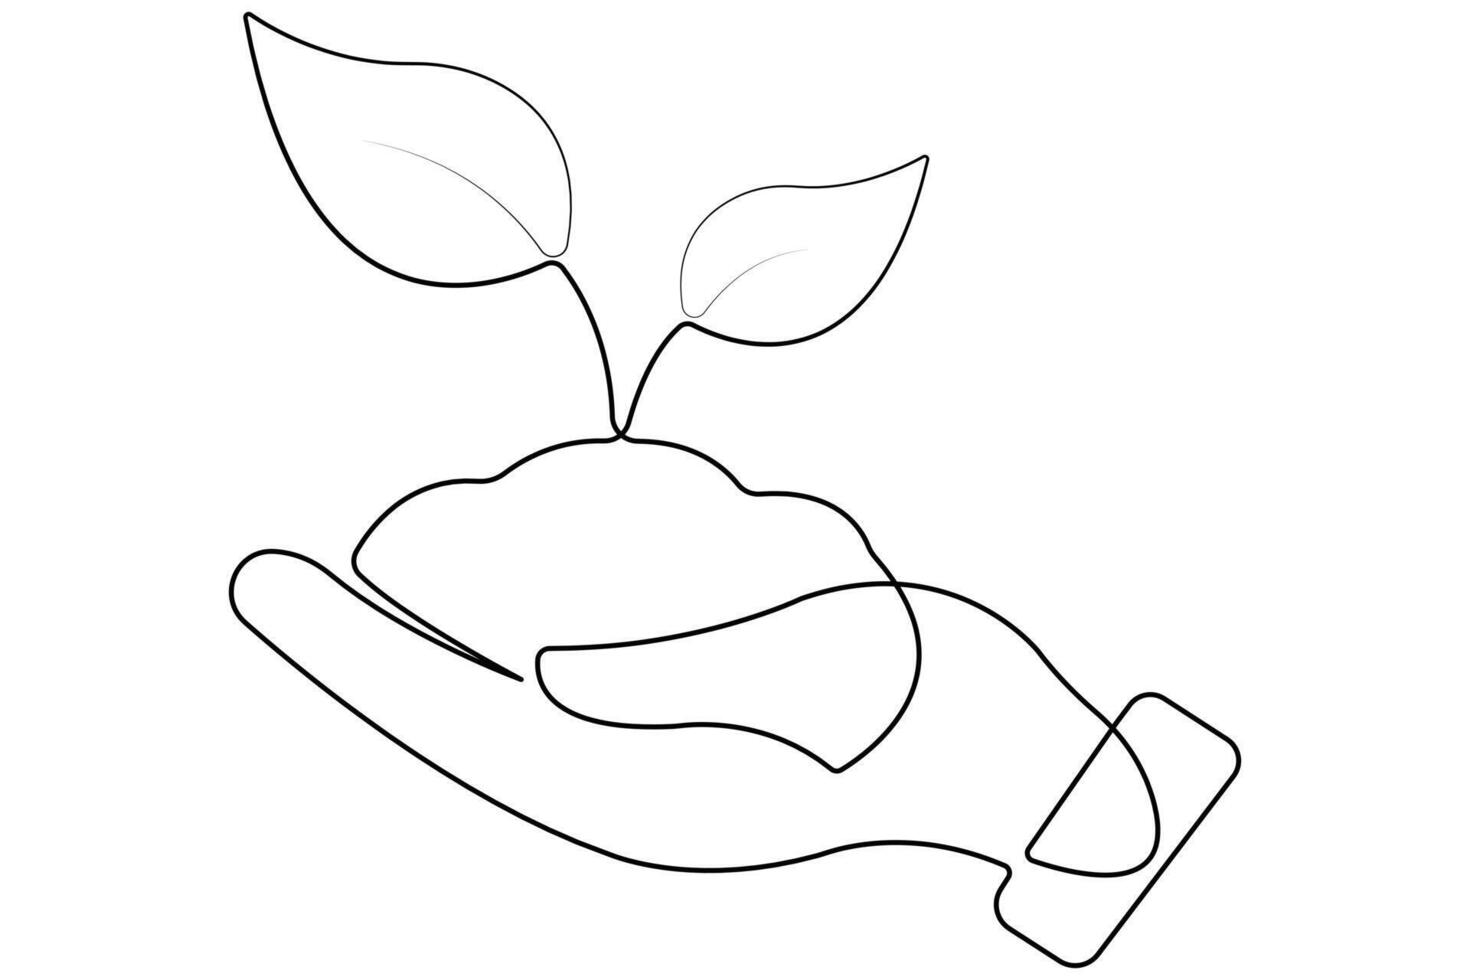 continuo soltero línea Arte dibujo de planta lata ser para plantas, agricultura, semillas contorno vector